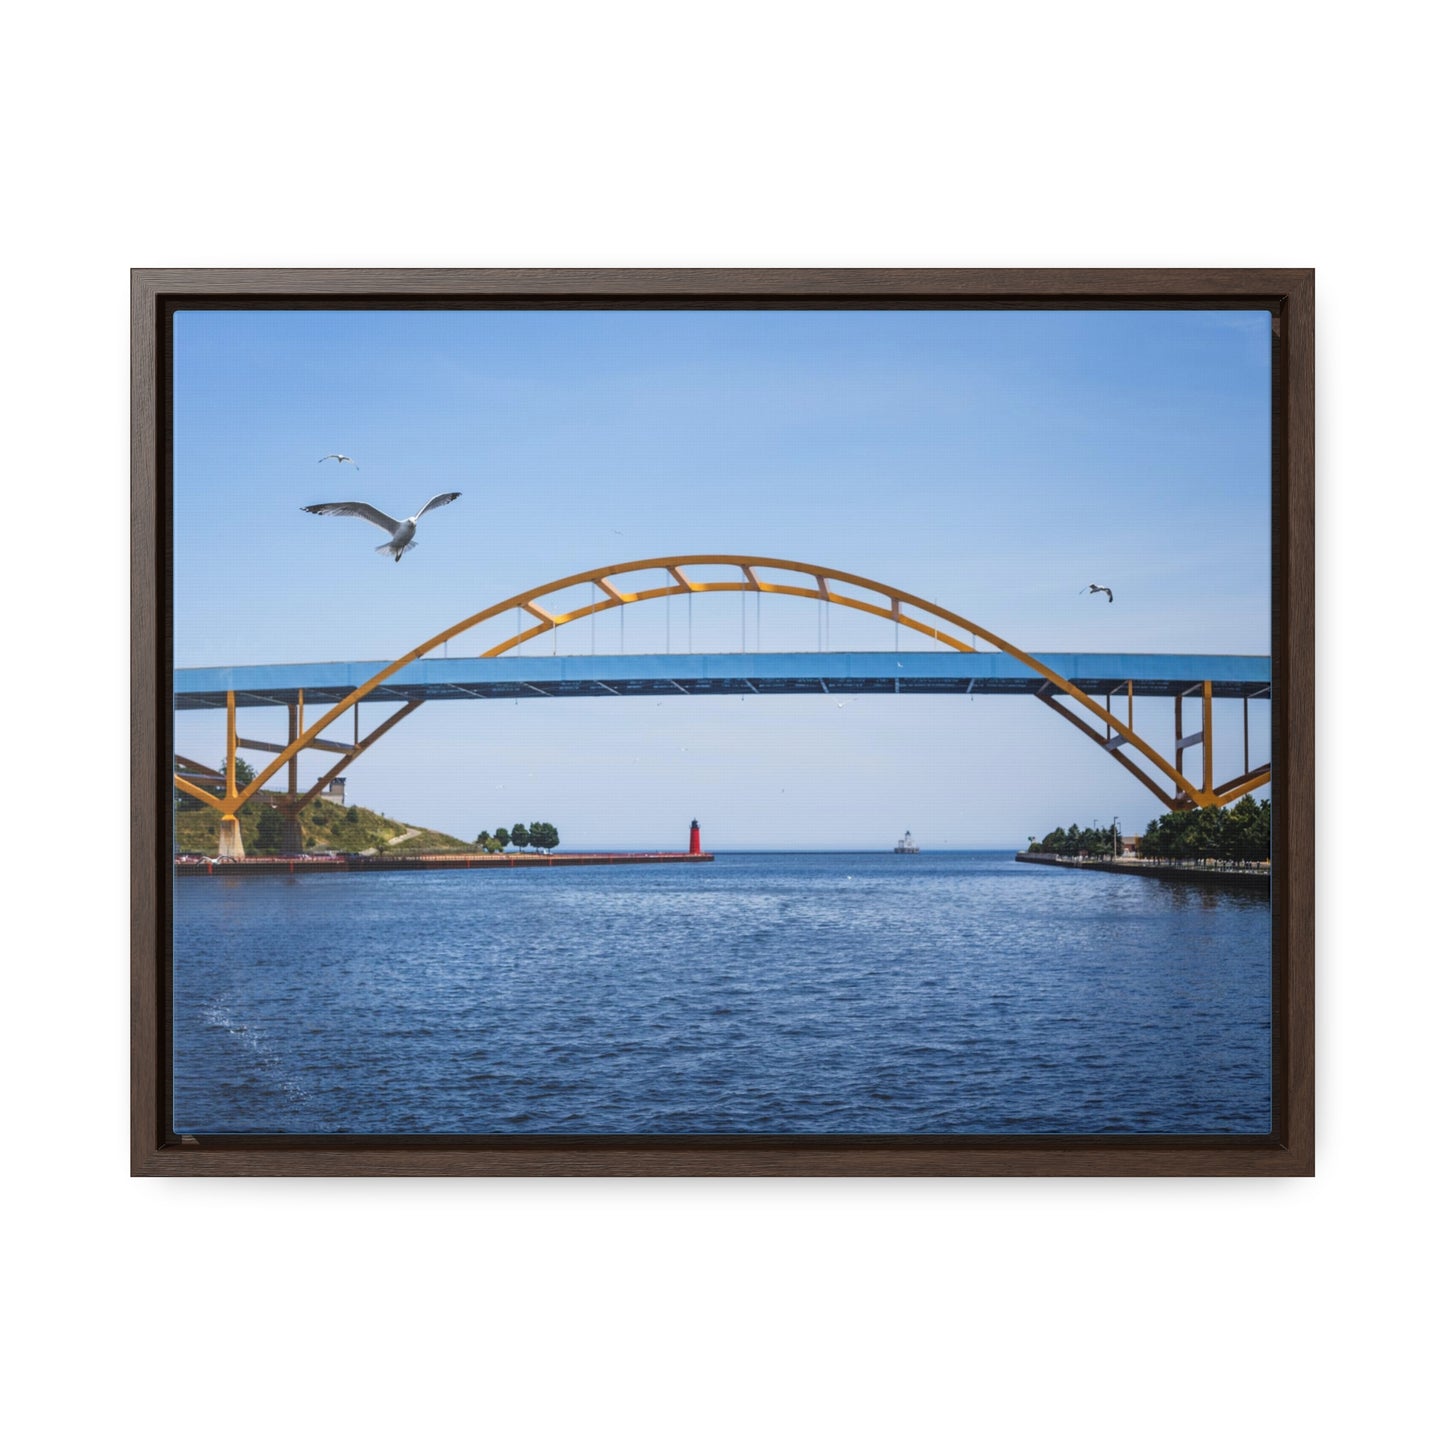 Milwaukee, Wisconsin’s Hoan Bridge and Seagulls, Photography Framed Canvas Wrap Wall Art